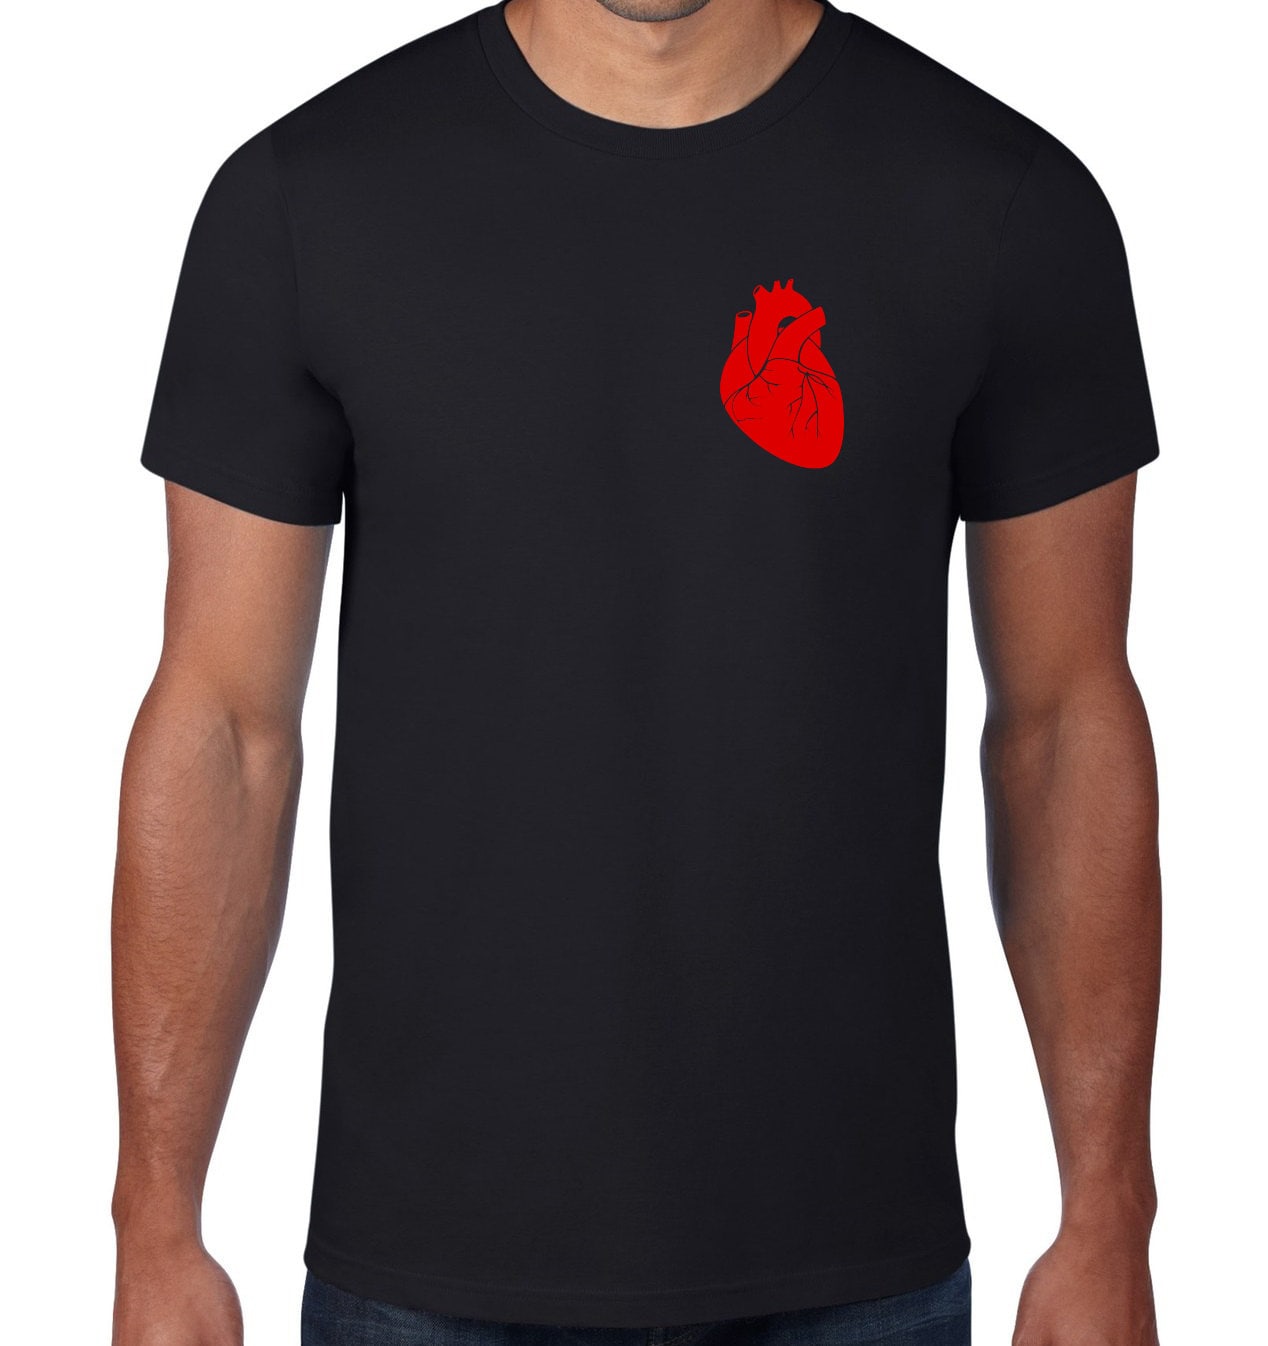 Anatomy TShirt Anatomical Heart Shirt Horror Tee Anatomy T